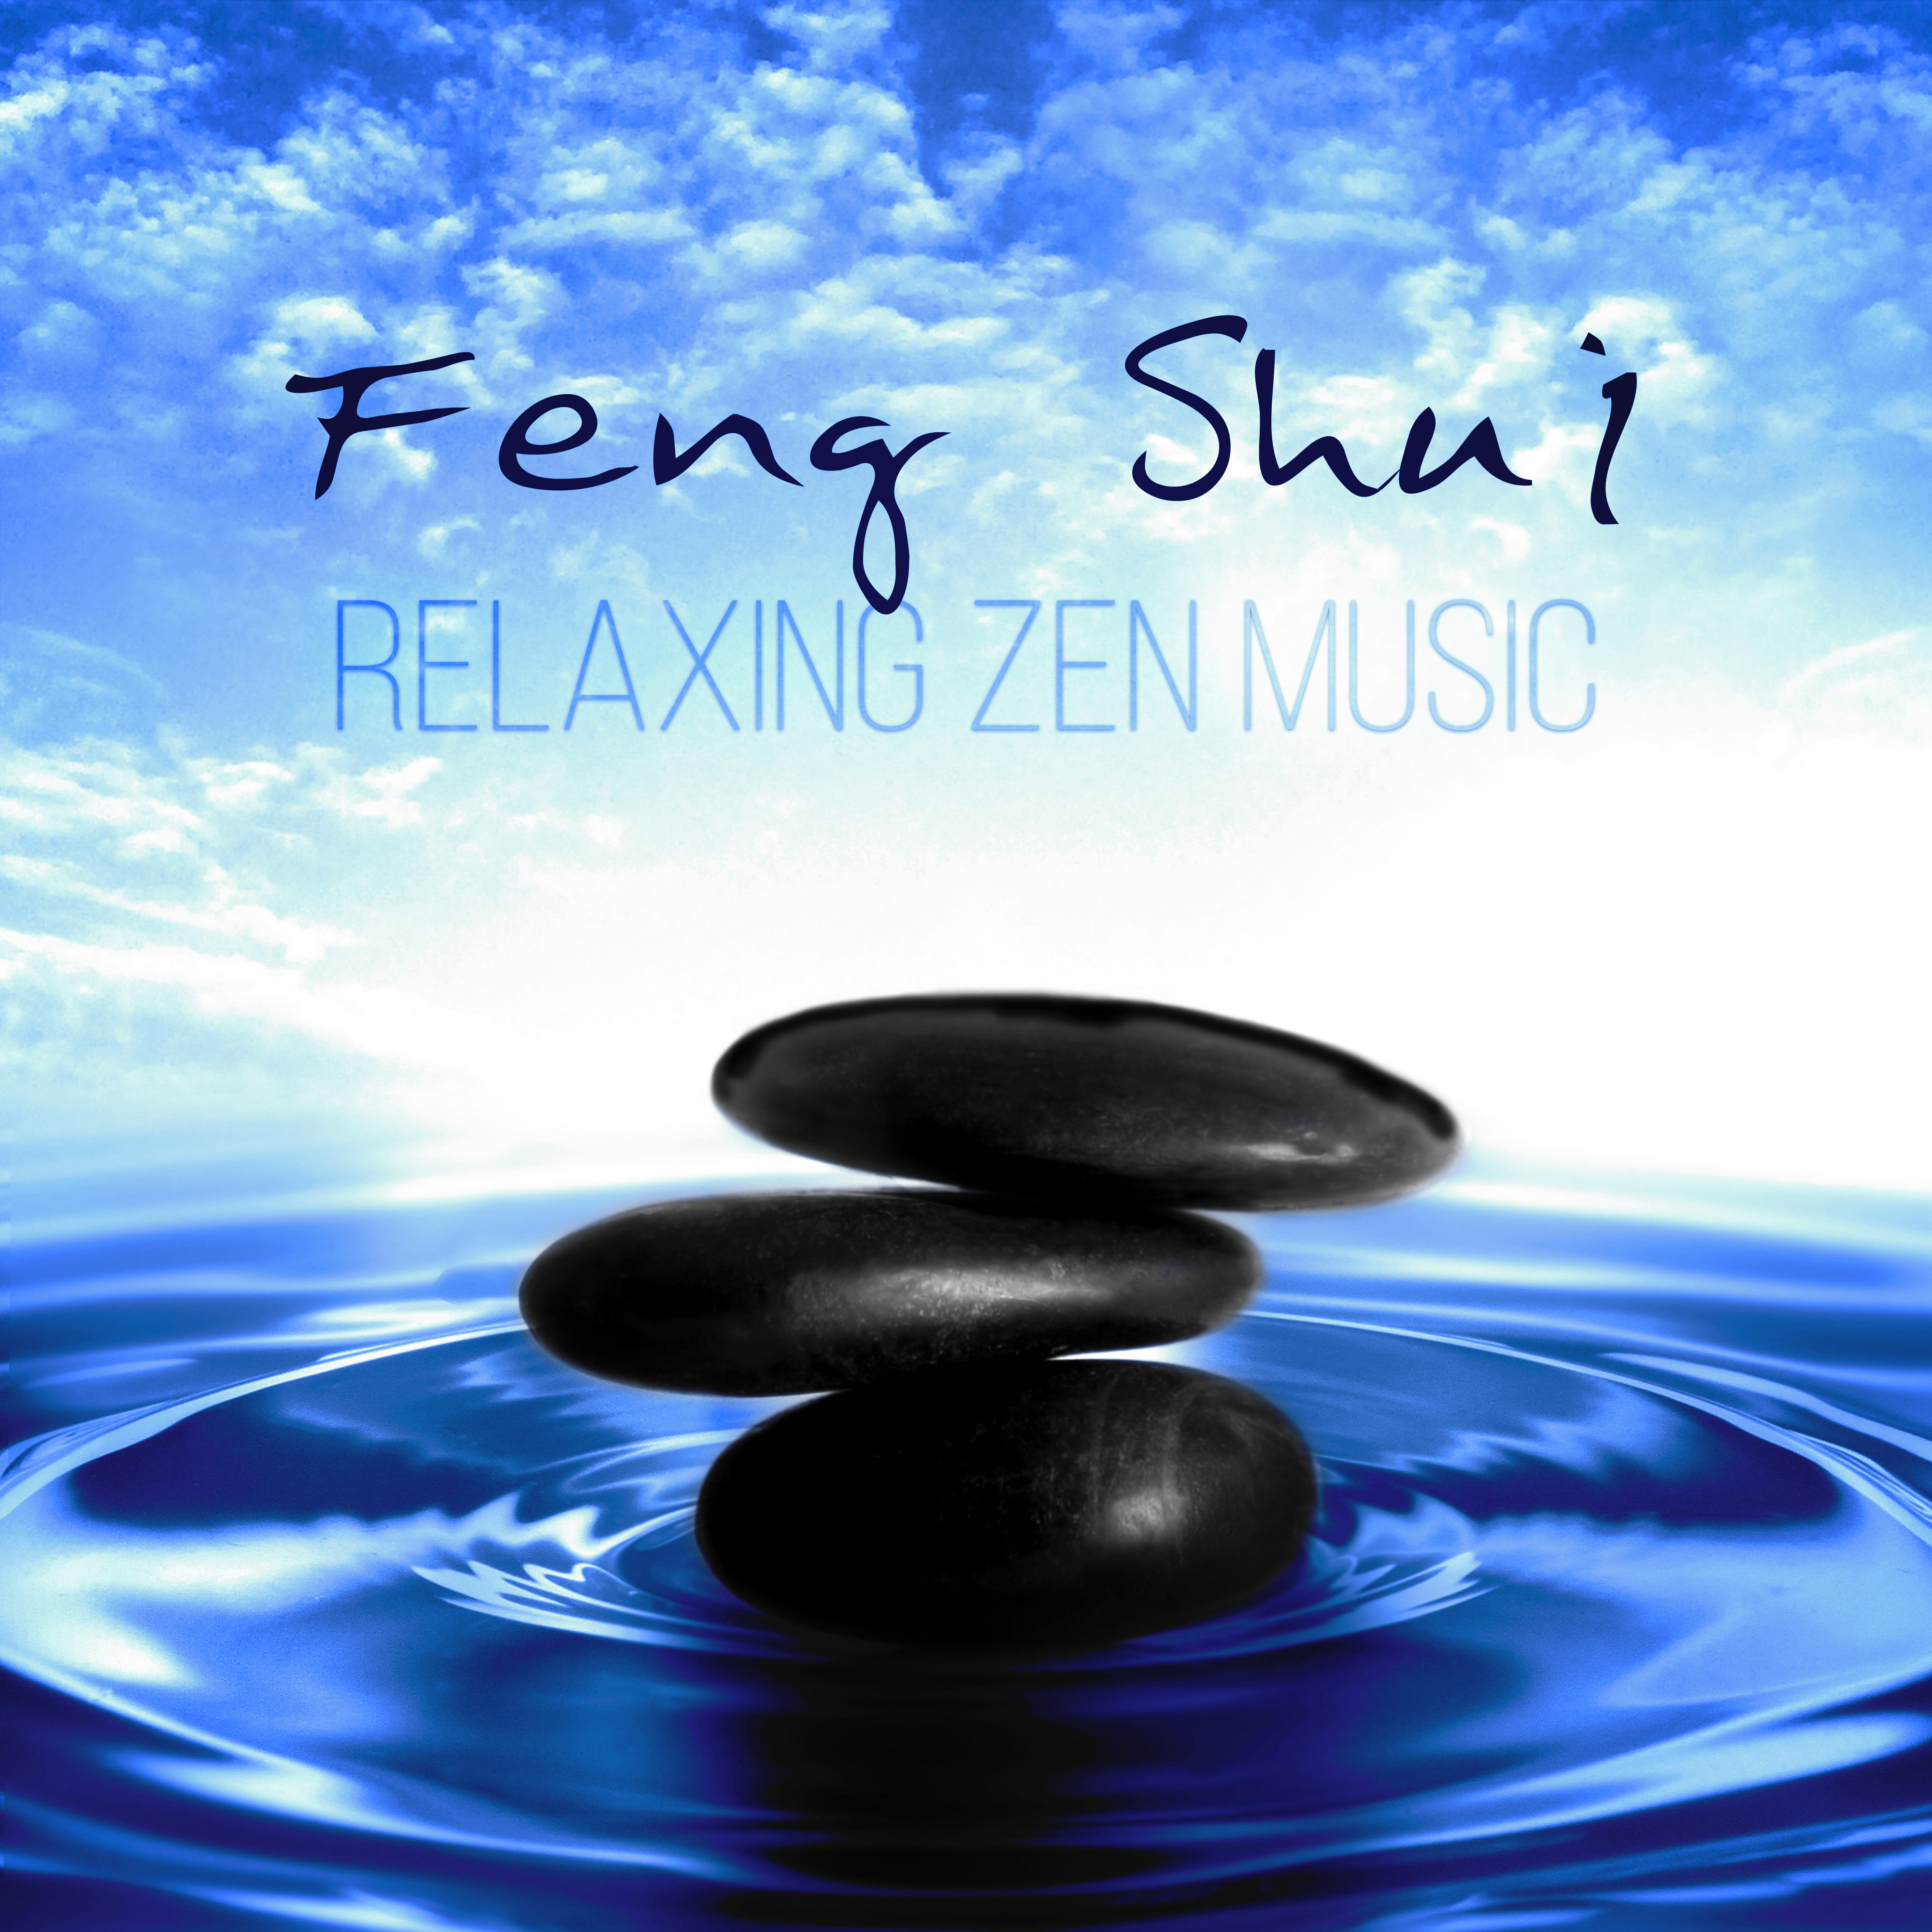 Feng Shui – Relaxing Zen Music, Yin Yang Balance, Relax with Nature Sounds, Mindfulness Meditation, Yoga, Reiki, Spa, Wellness, Massage